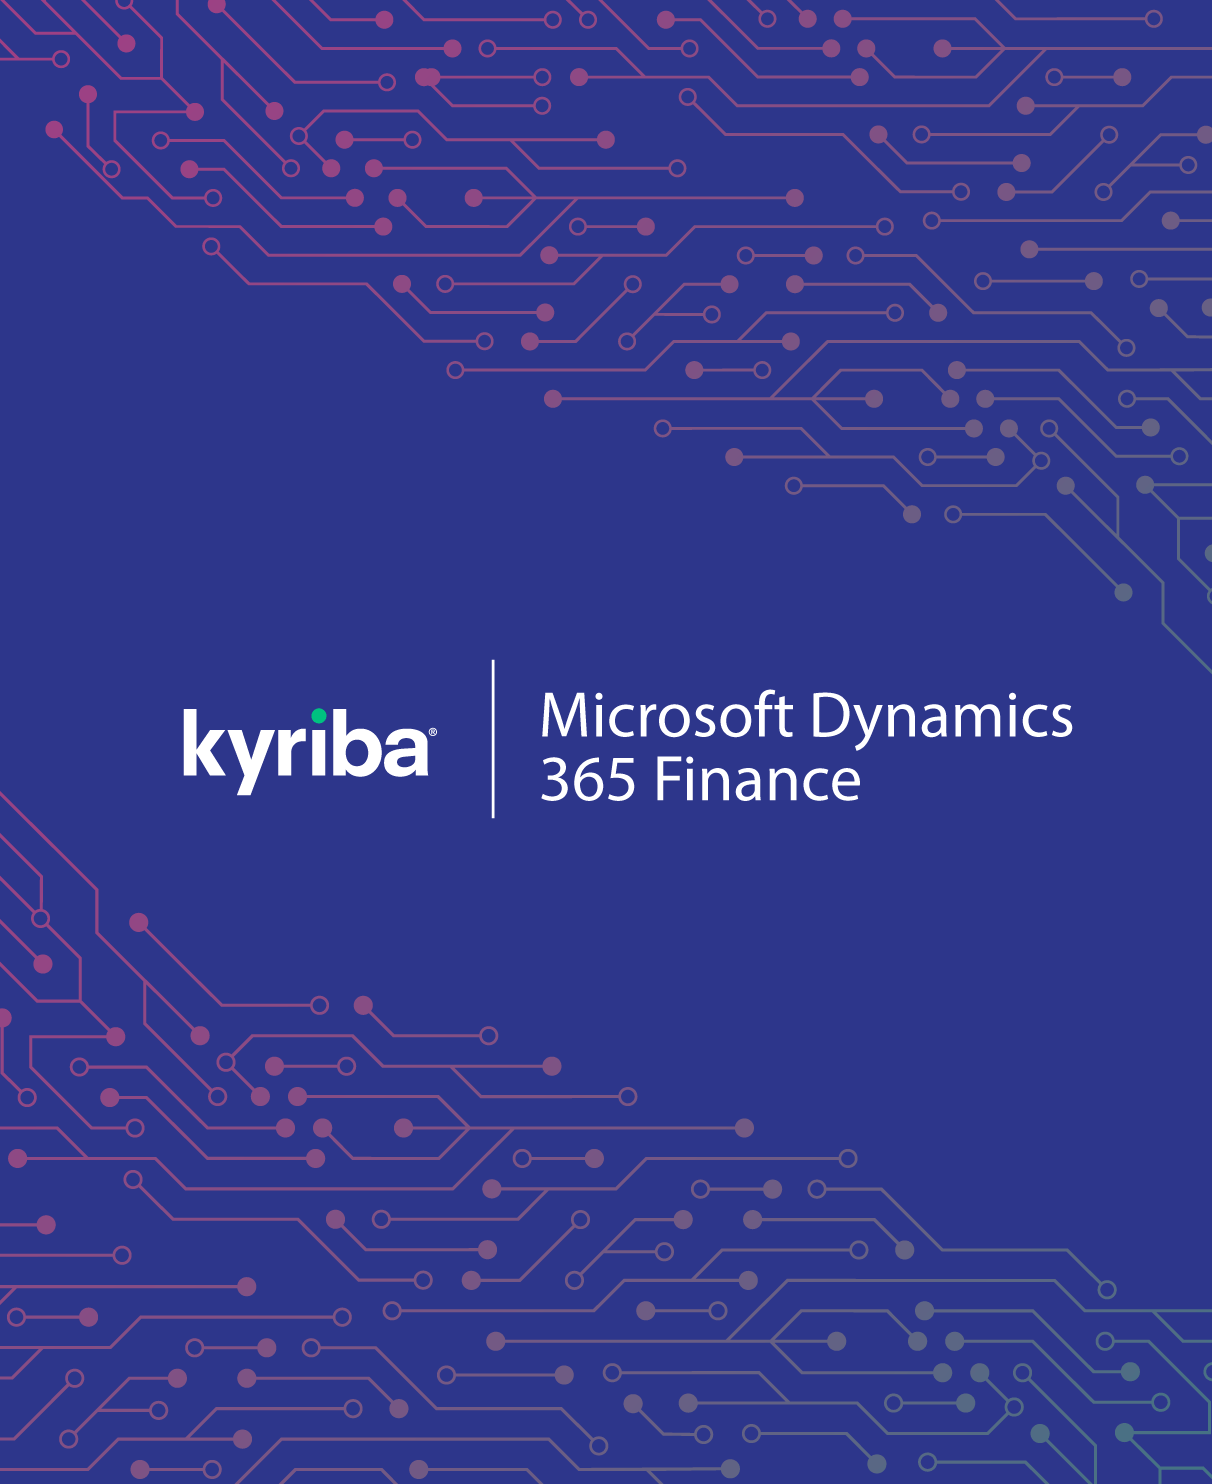 Microsoft Dynamics 365 Finance